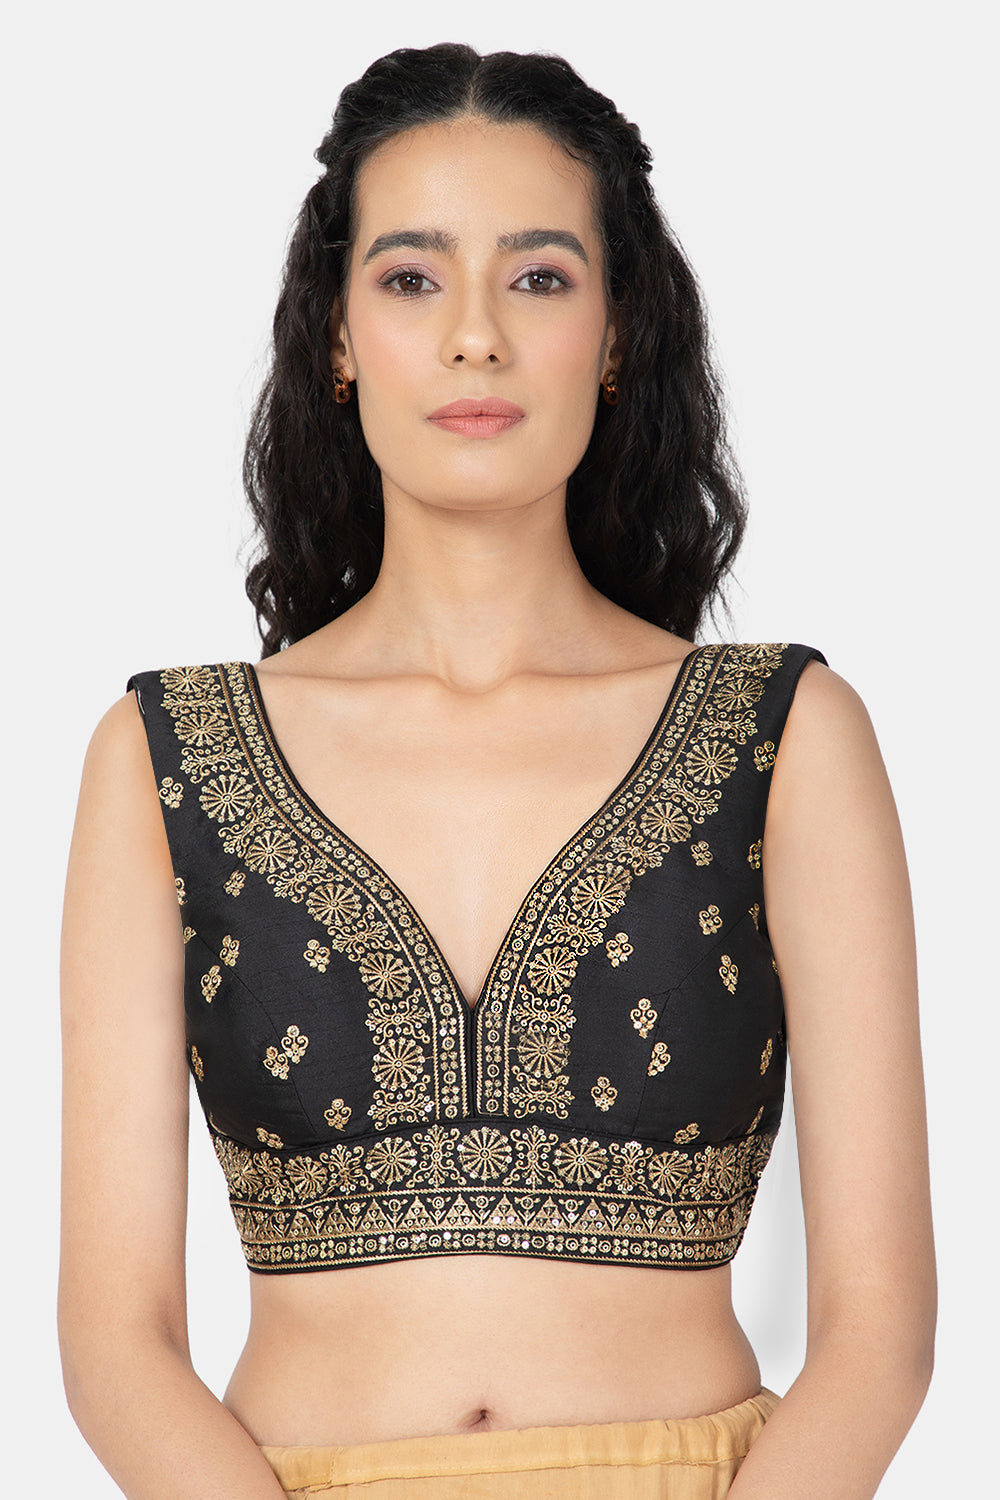 Brocade Blouse Bollywood Lehenga Crop Top Readymade Sari Choli Wedding  Partywear Black at Amazon Women's Clothing store